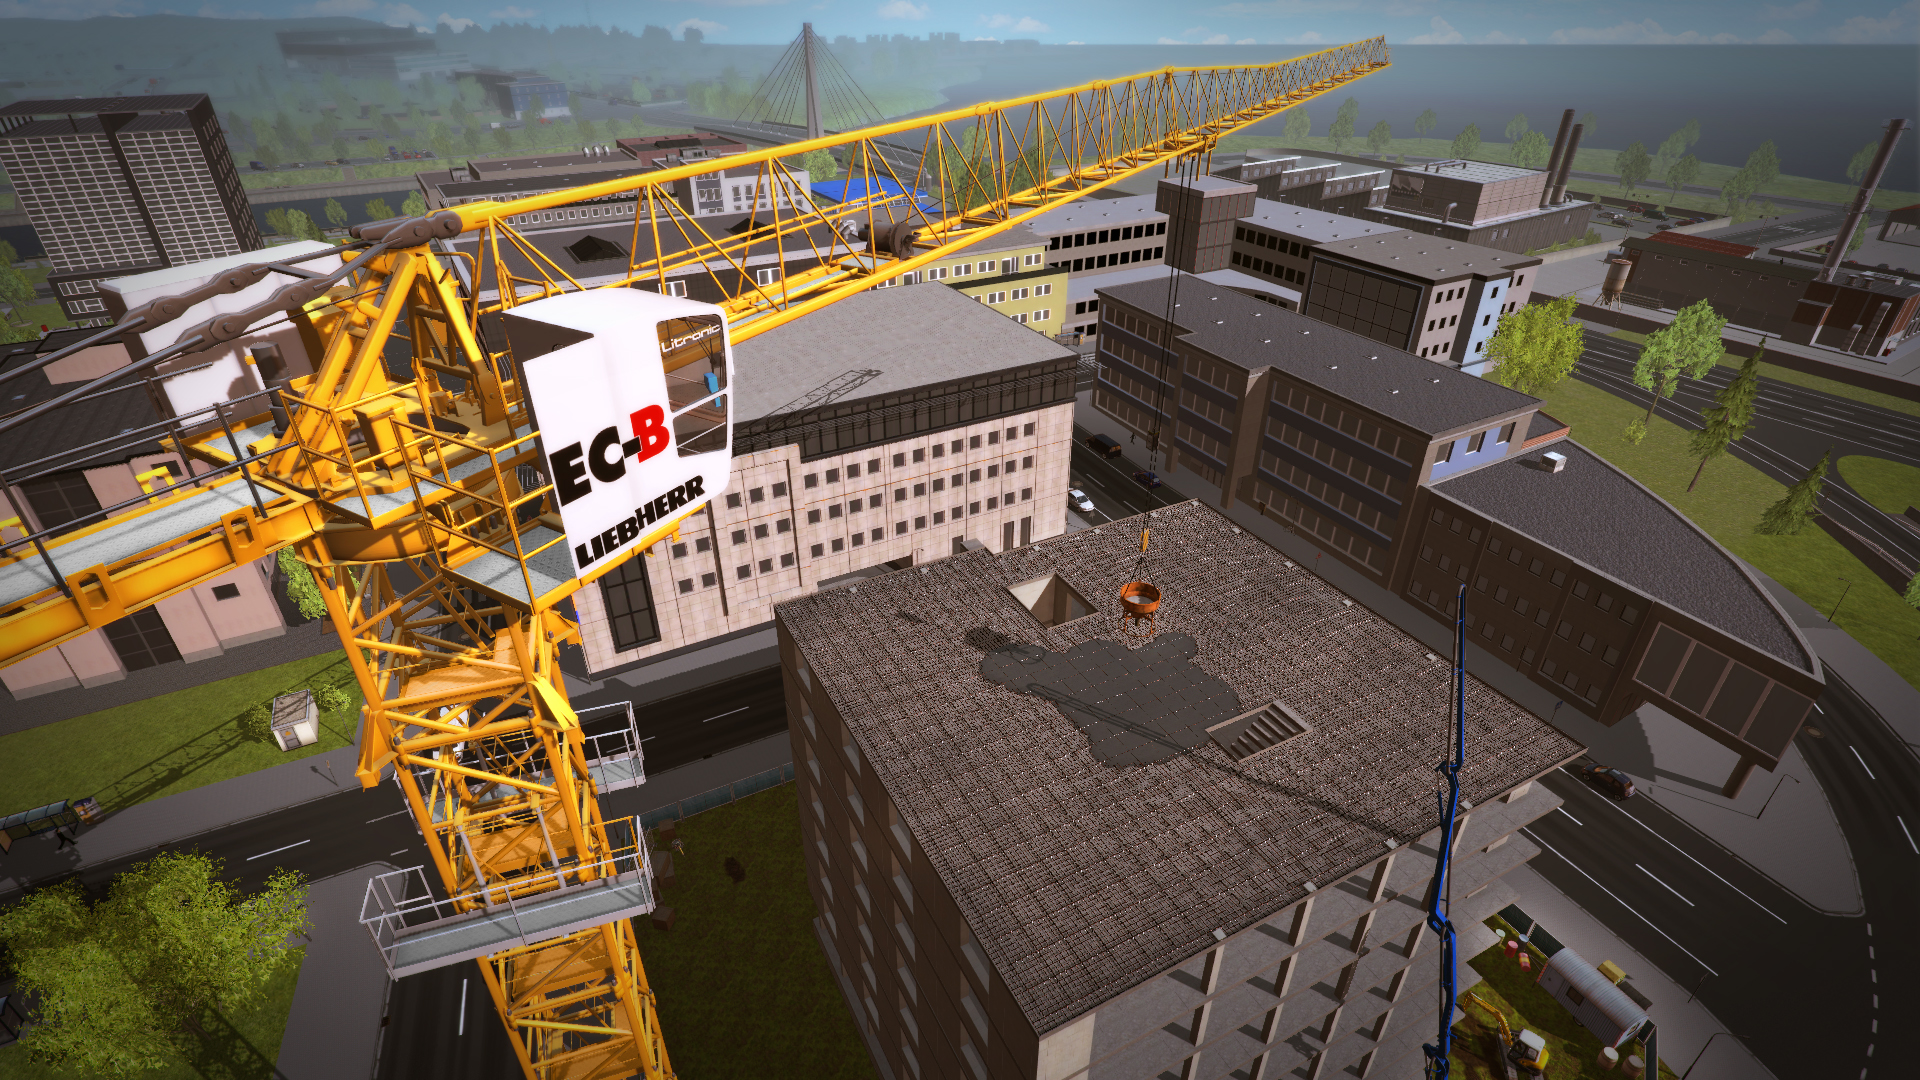 Construction Simulator 2015 On Steam